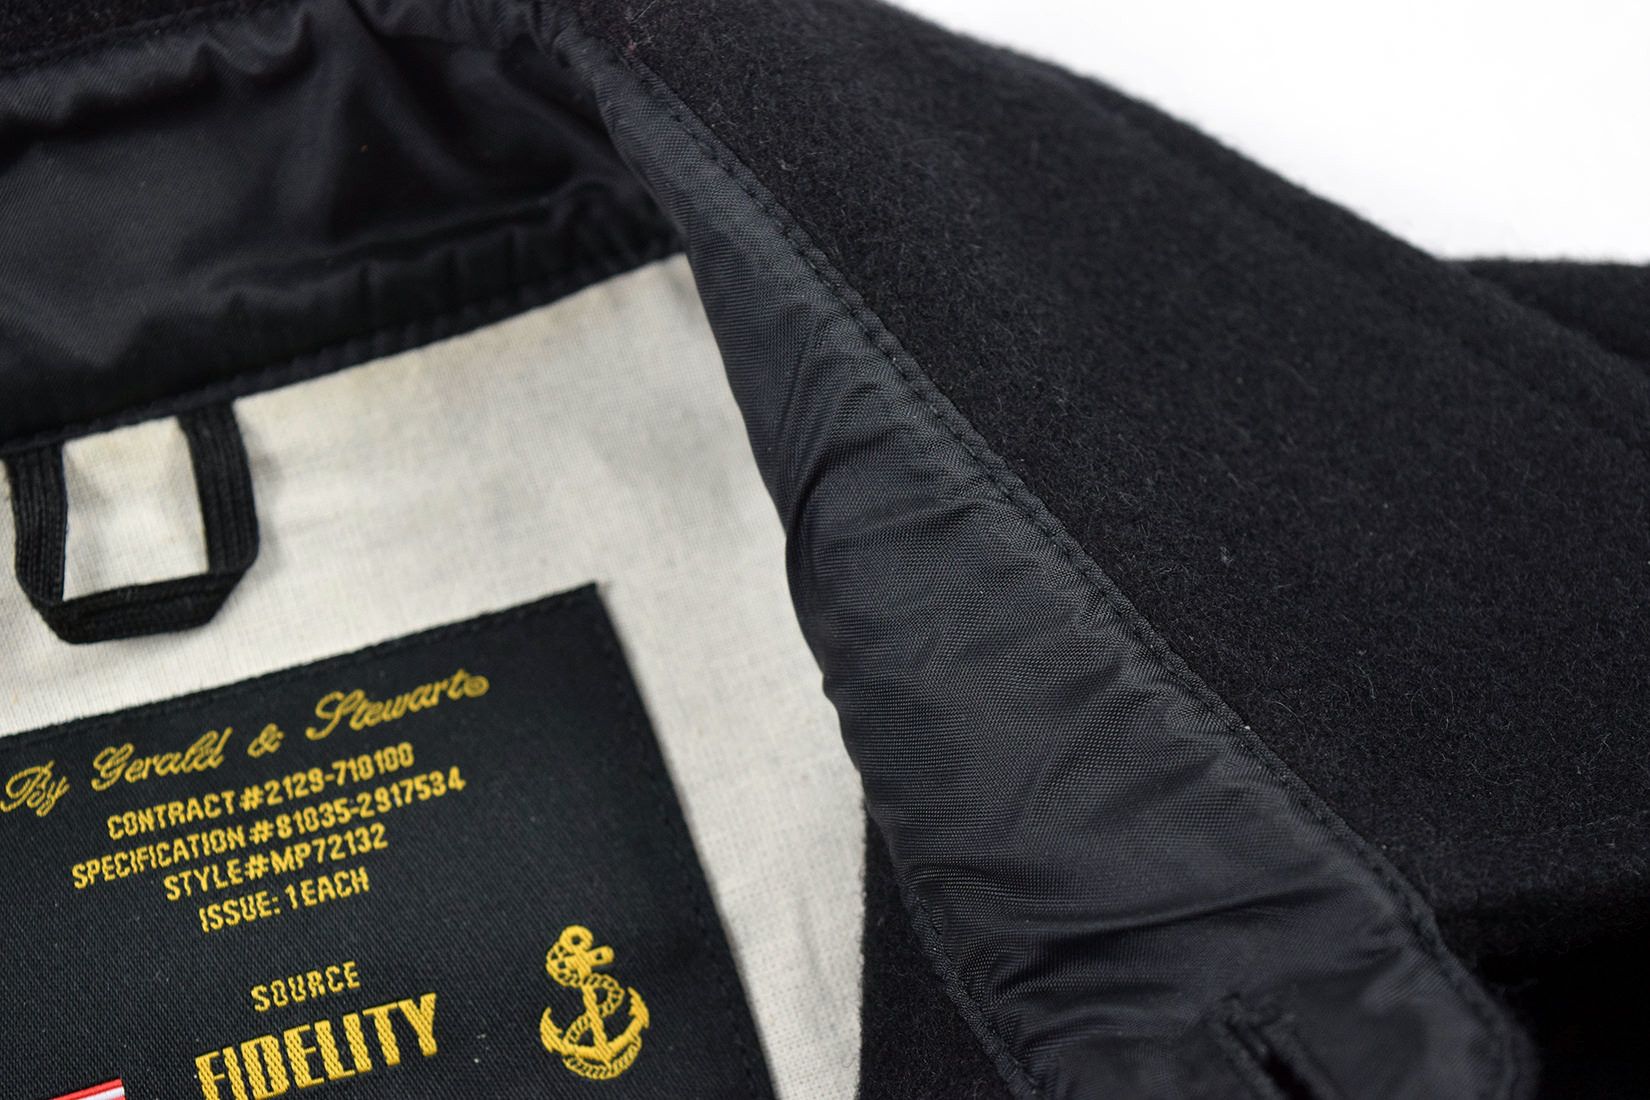 Fidelity Wool CPO Shirt Jacket Size US M / EU 48-50 / 2 - 7 Thumbnail